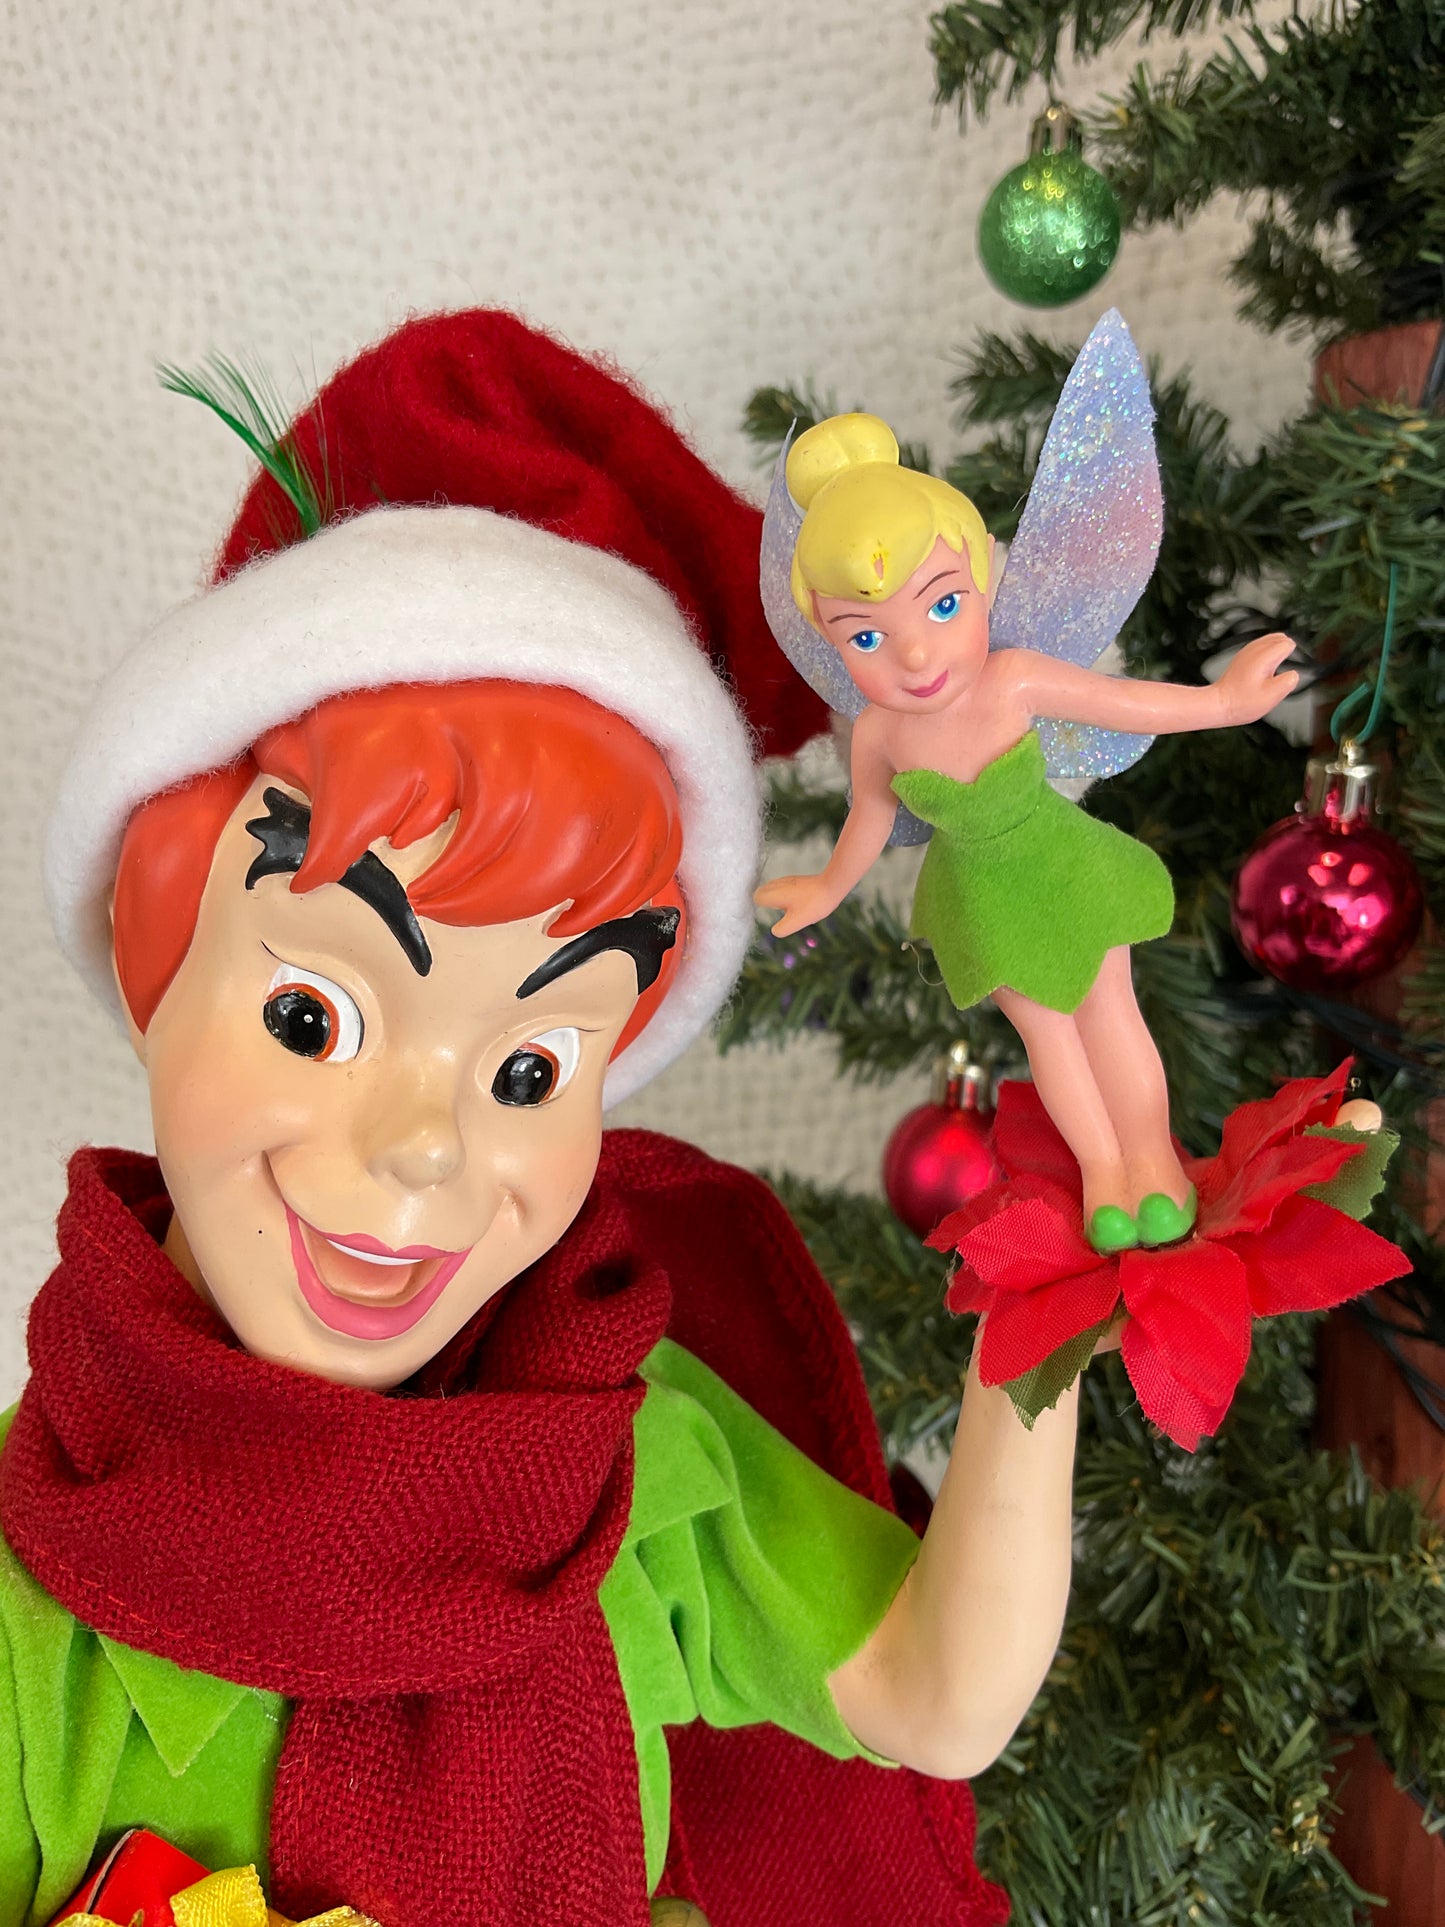 Disney's Peter Pan & Tinkerbell Musical Figurine